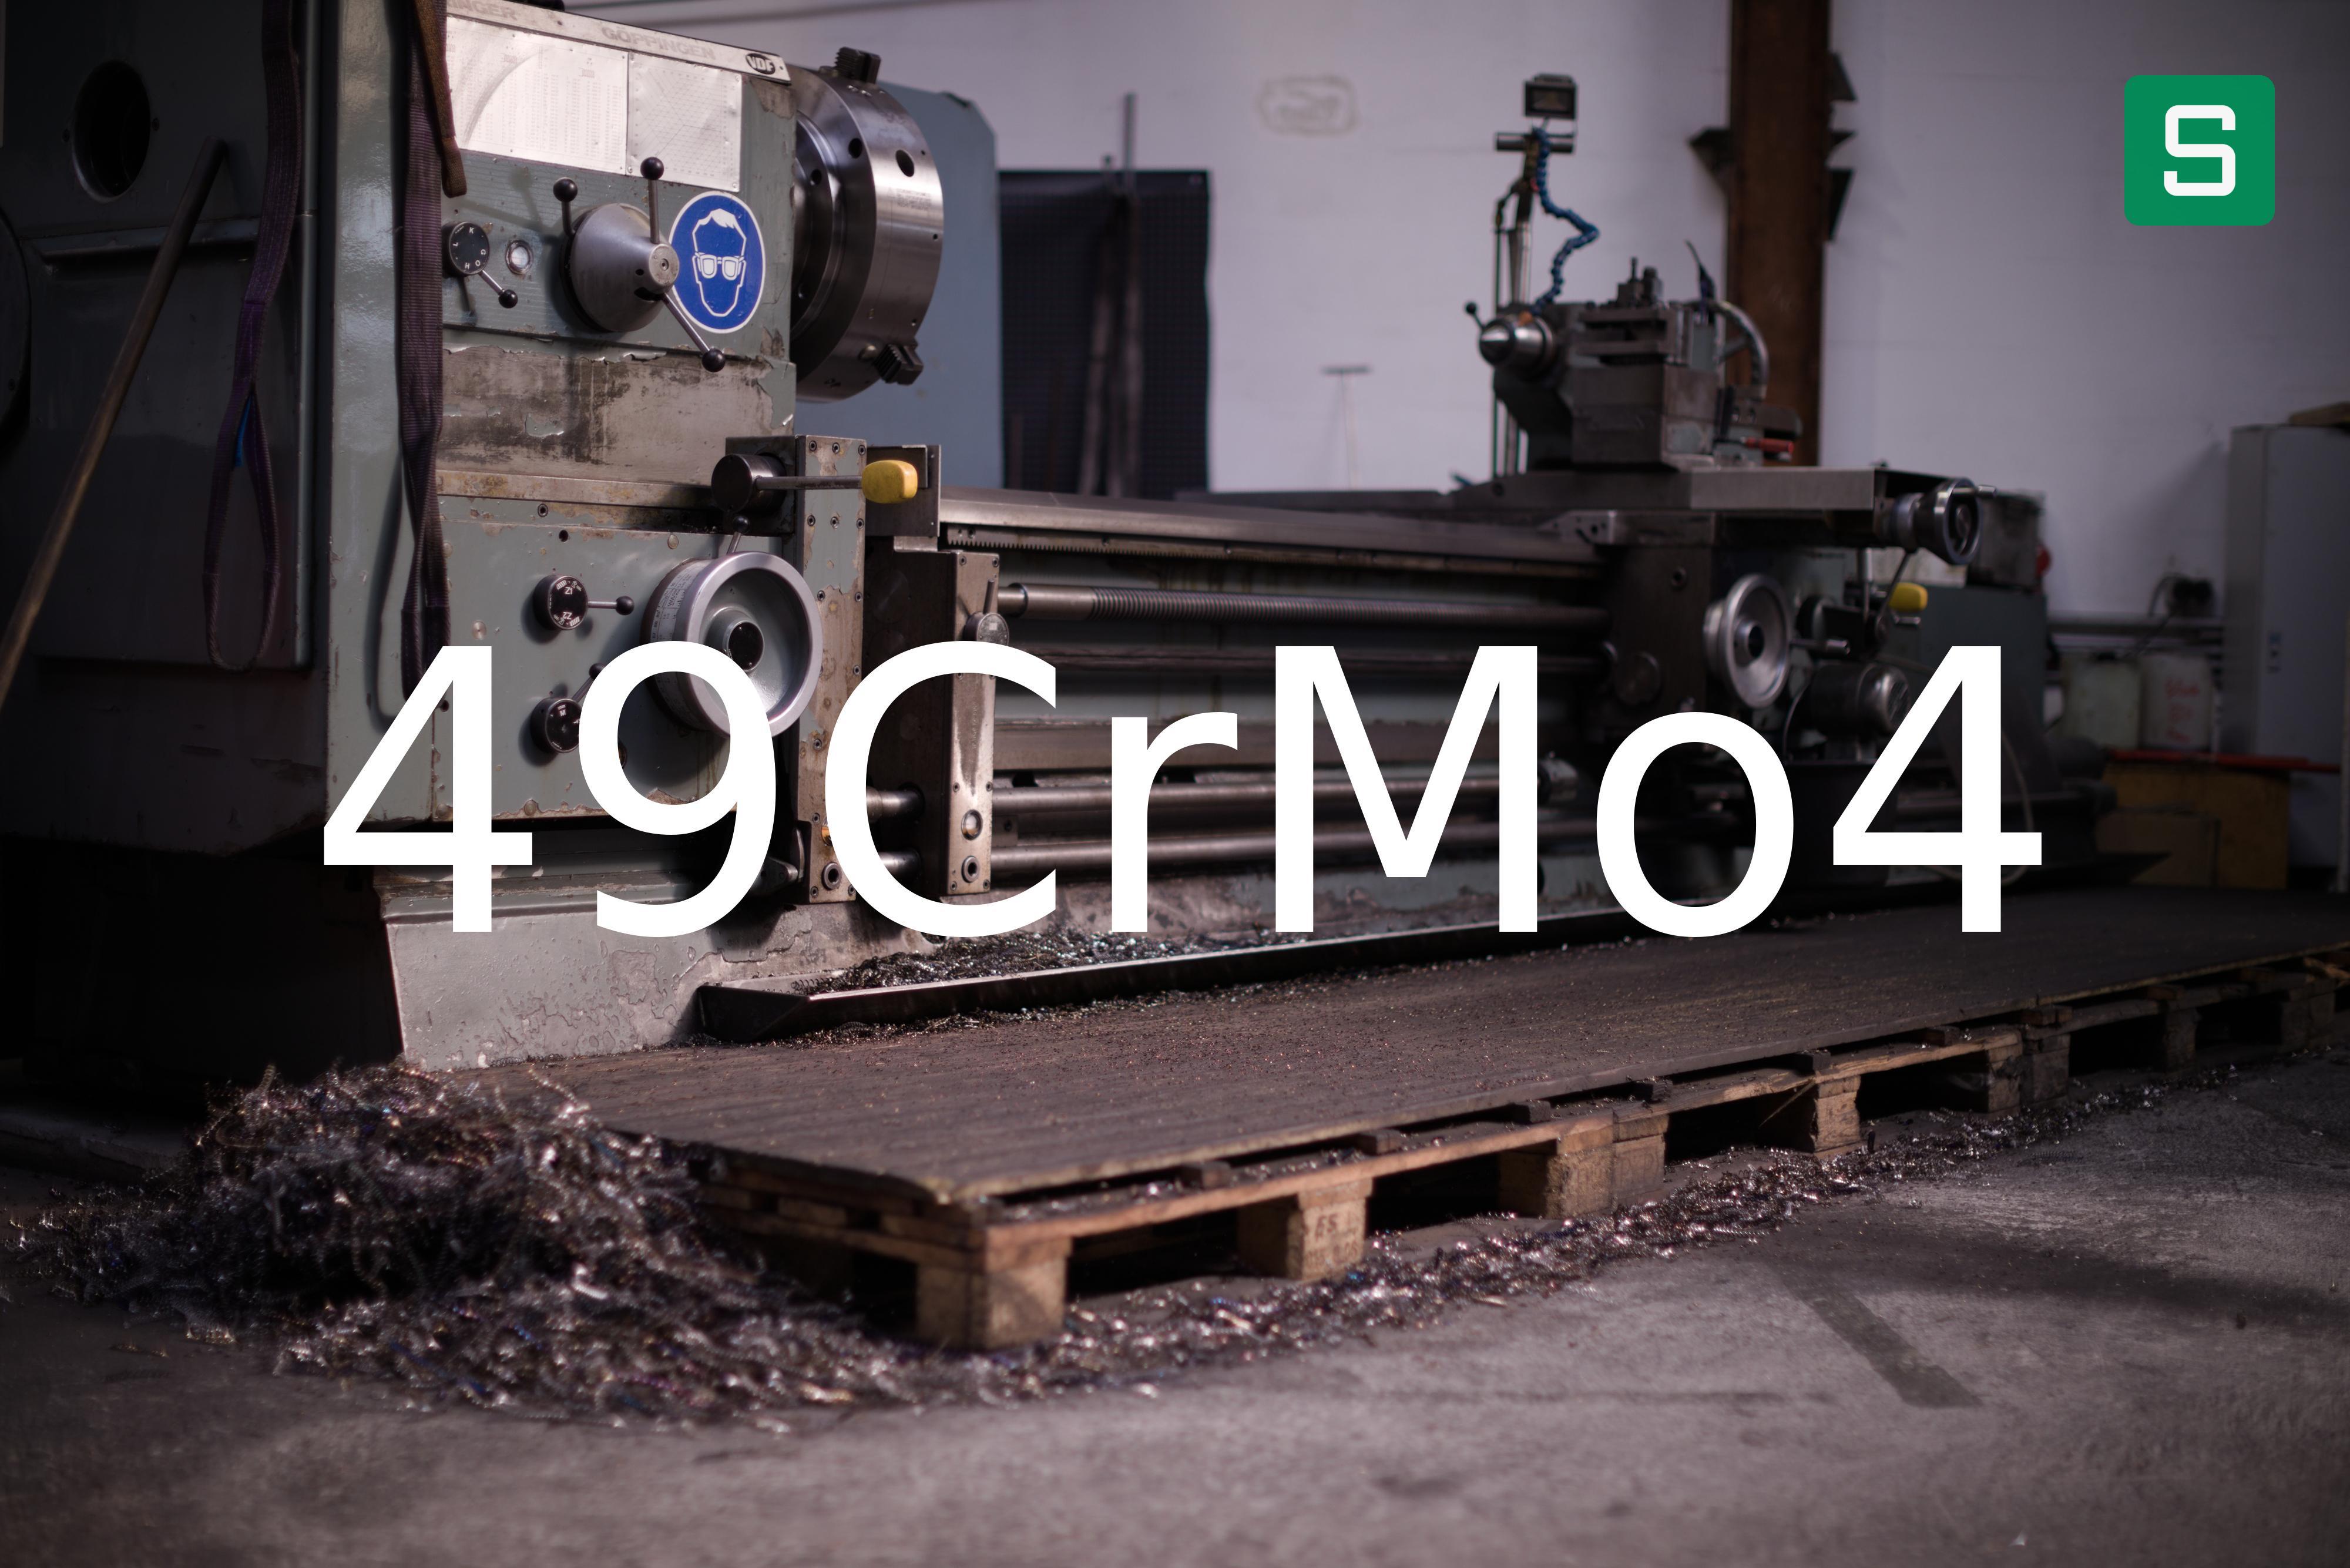 Steel Material: 49CrMo4